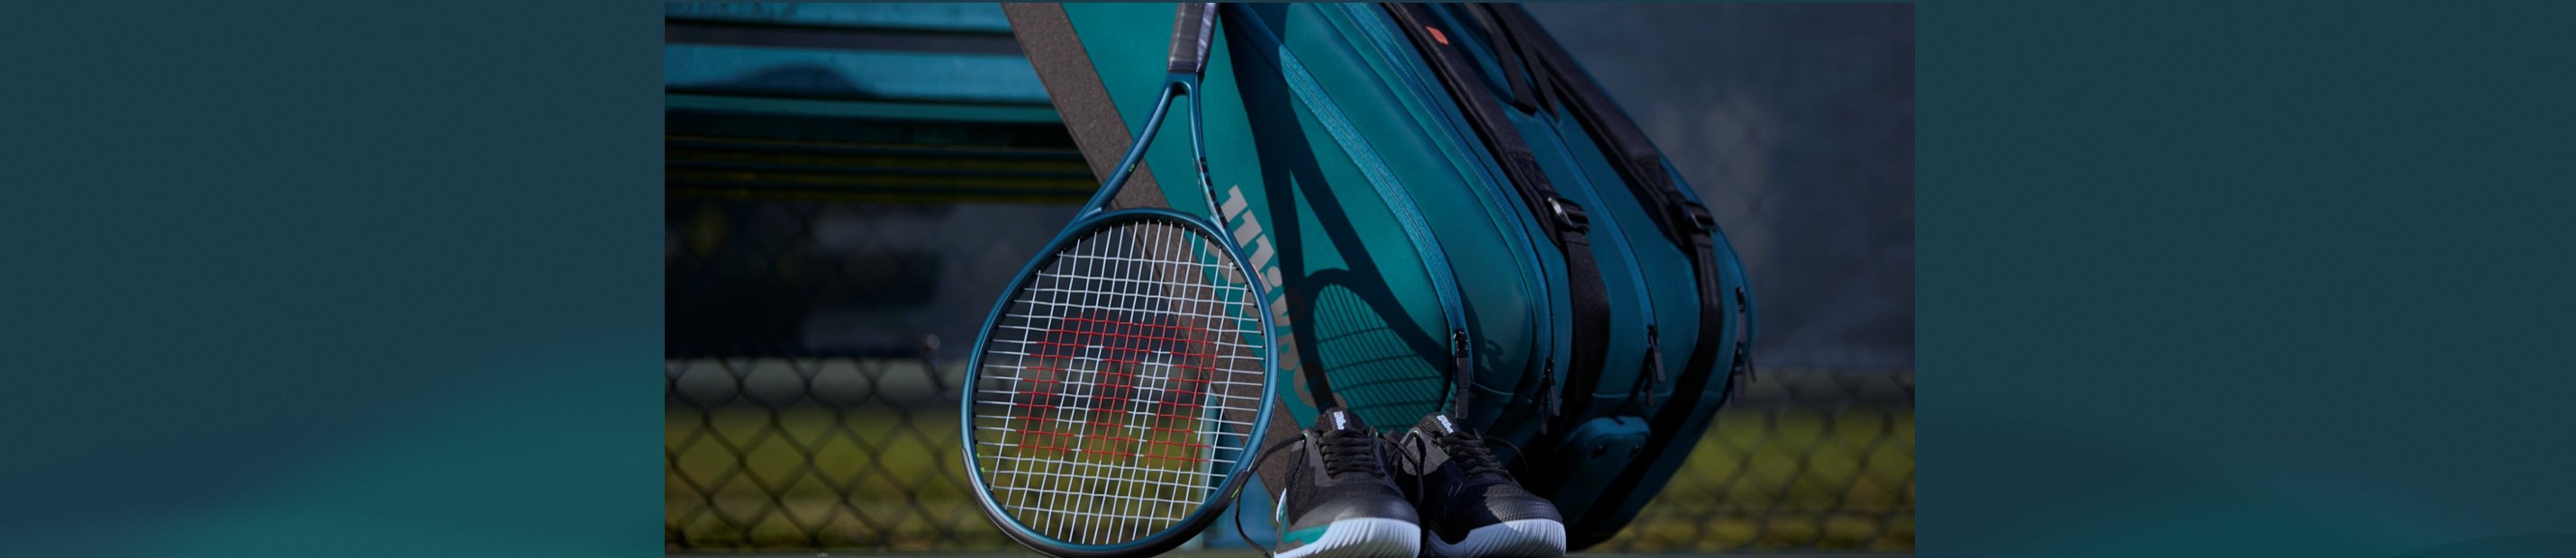 Wilson Blade Tennis Racket Collection